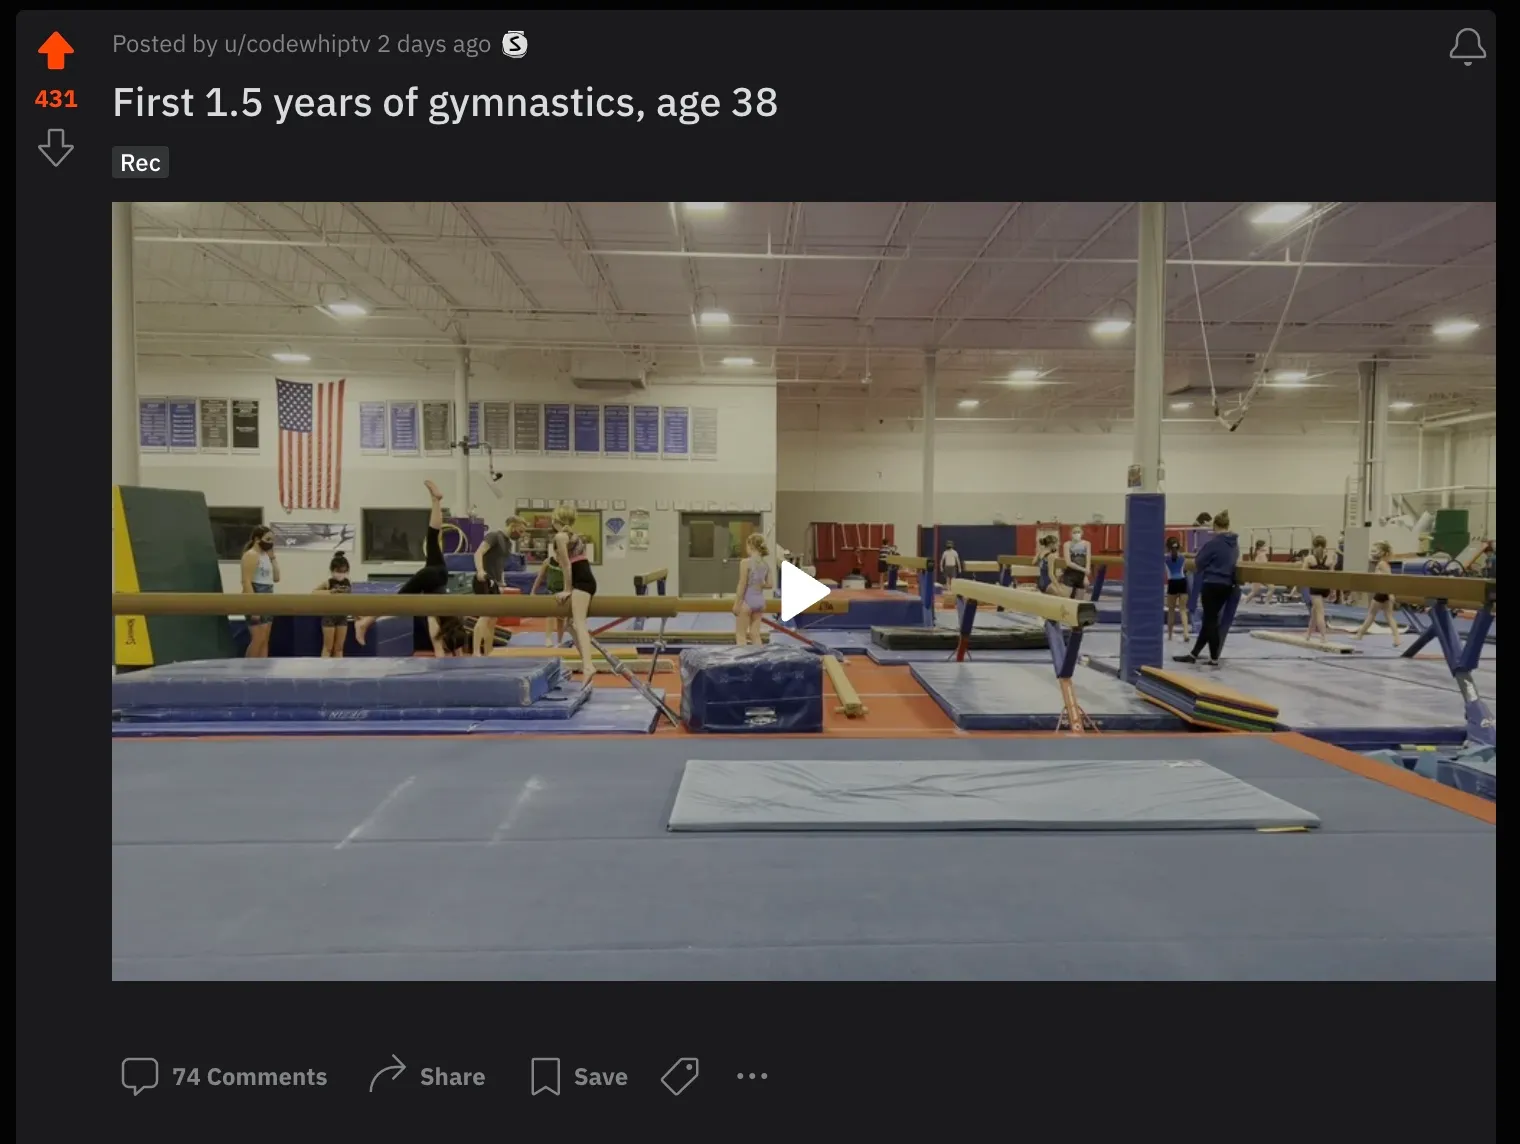 Gymnastics at Age 38